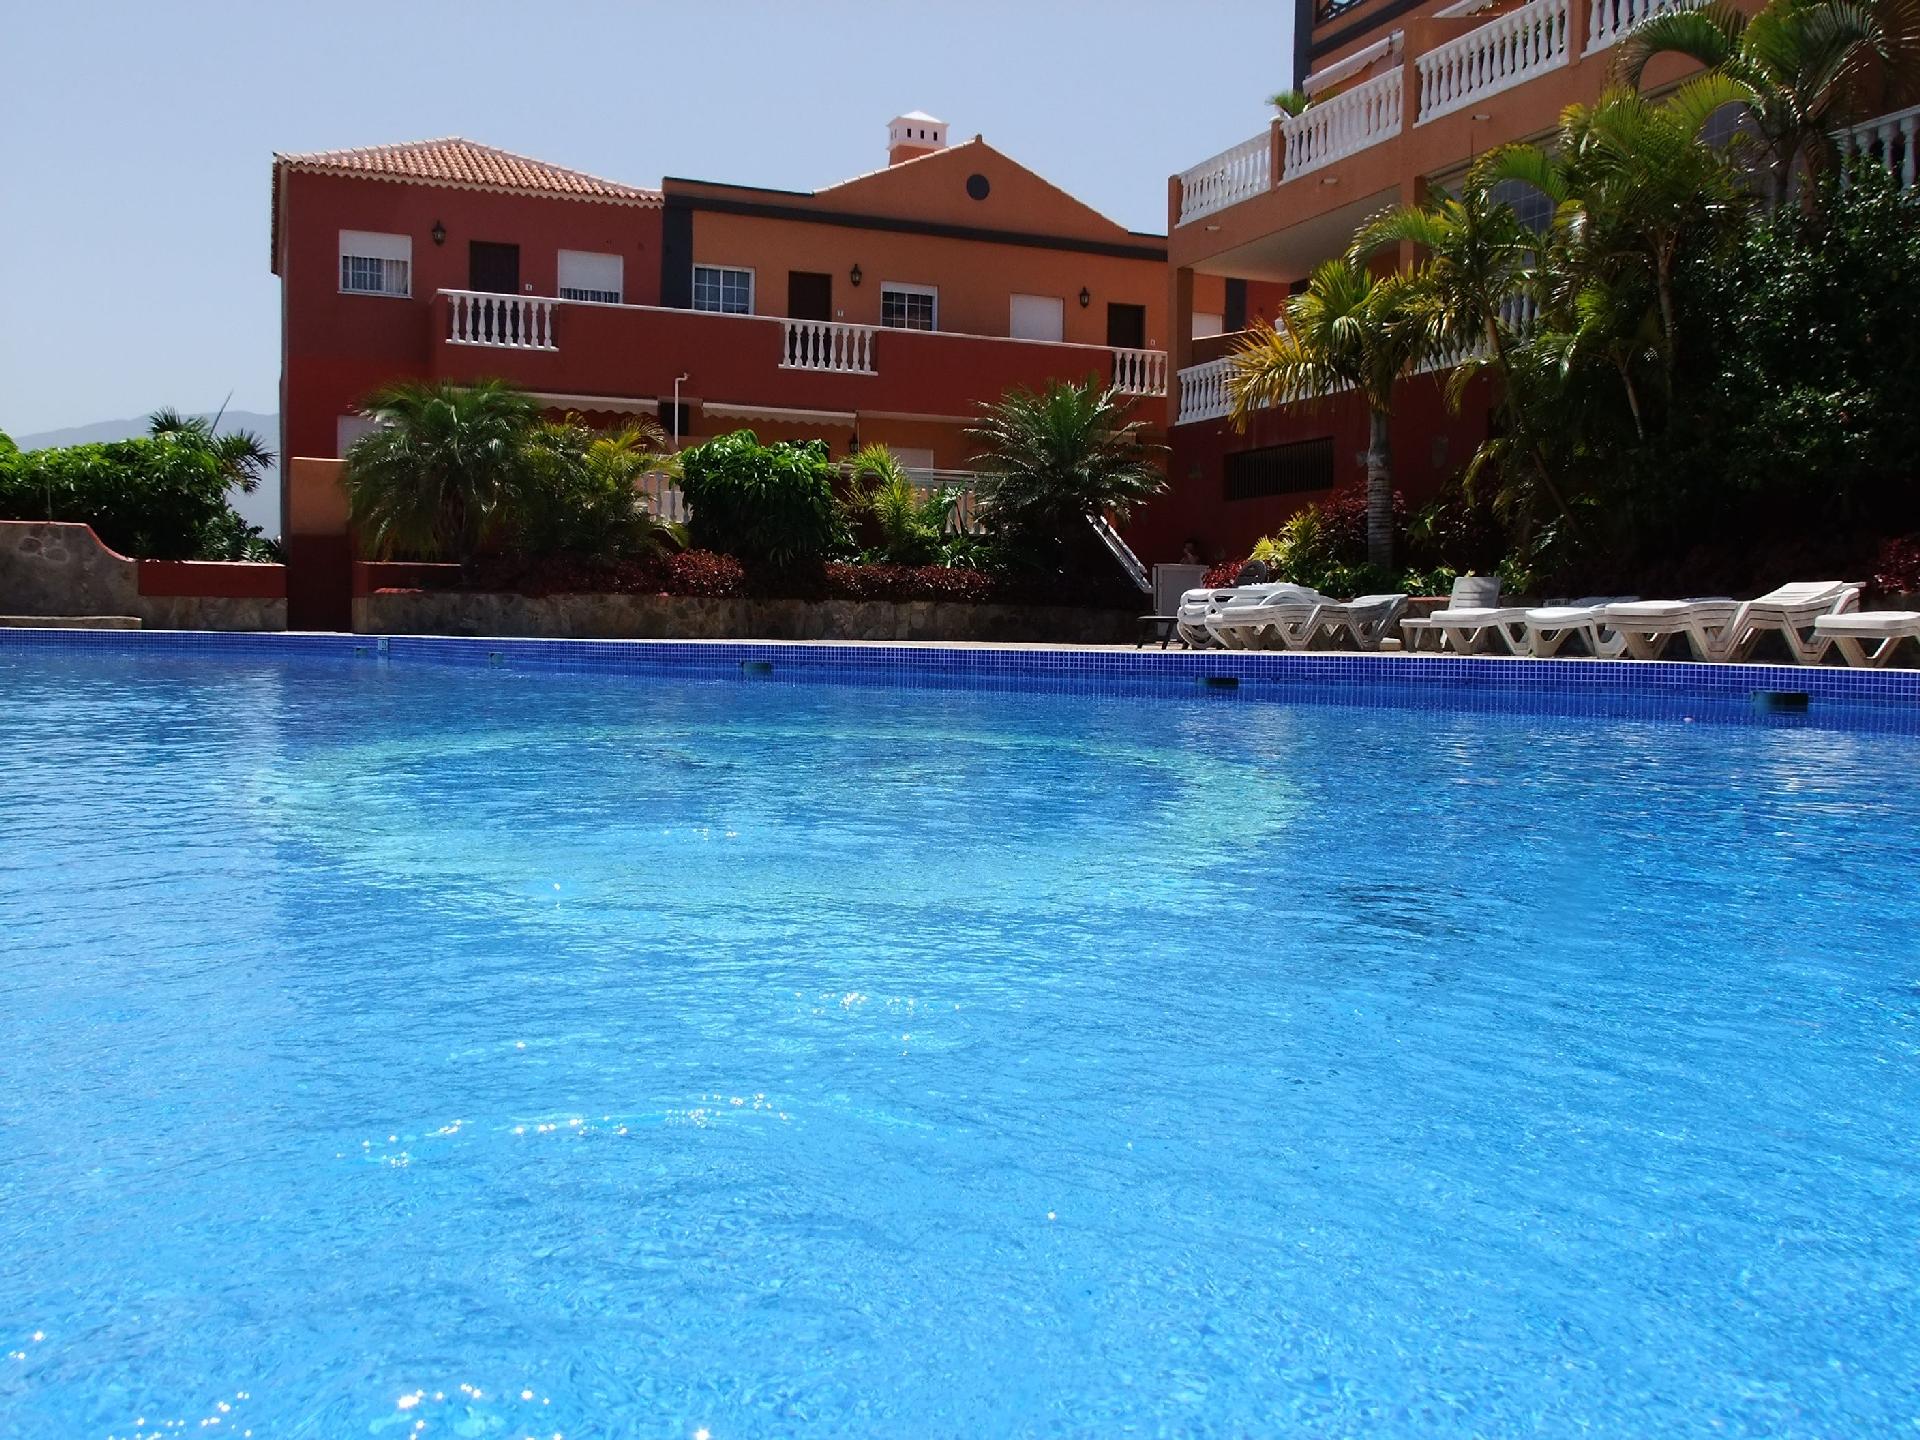 Ferienwohnung für 3 Personen ca. 90 m² i Ferienhaus in Puerto de la Cruz